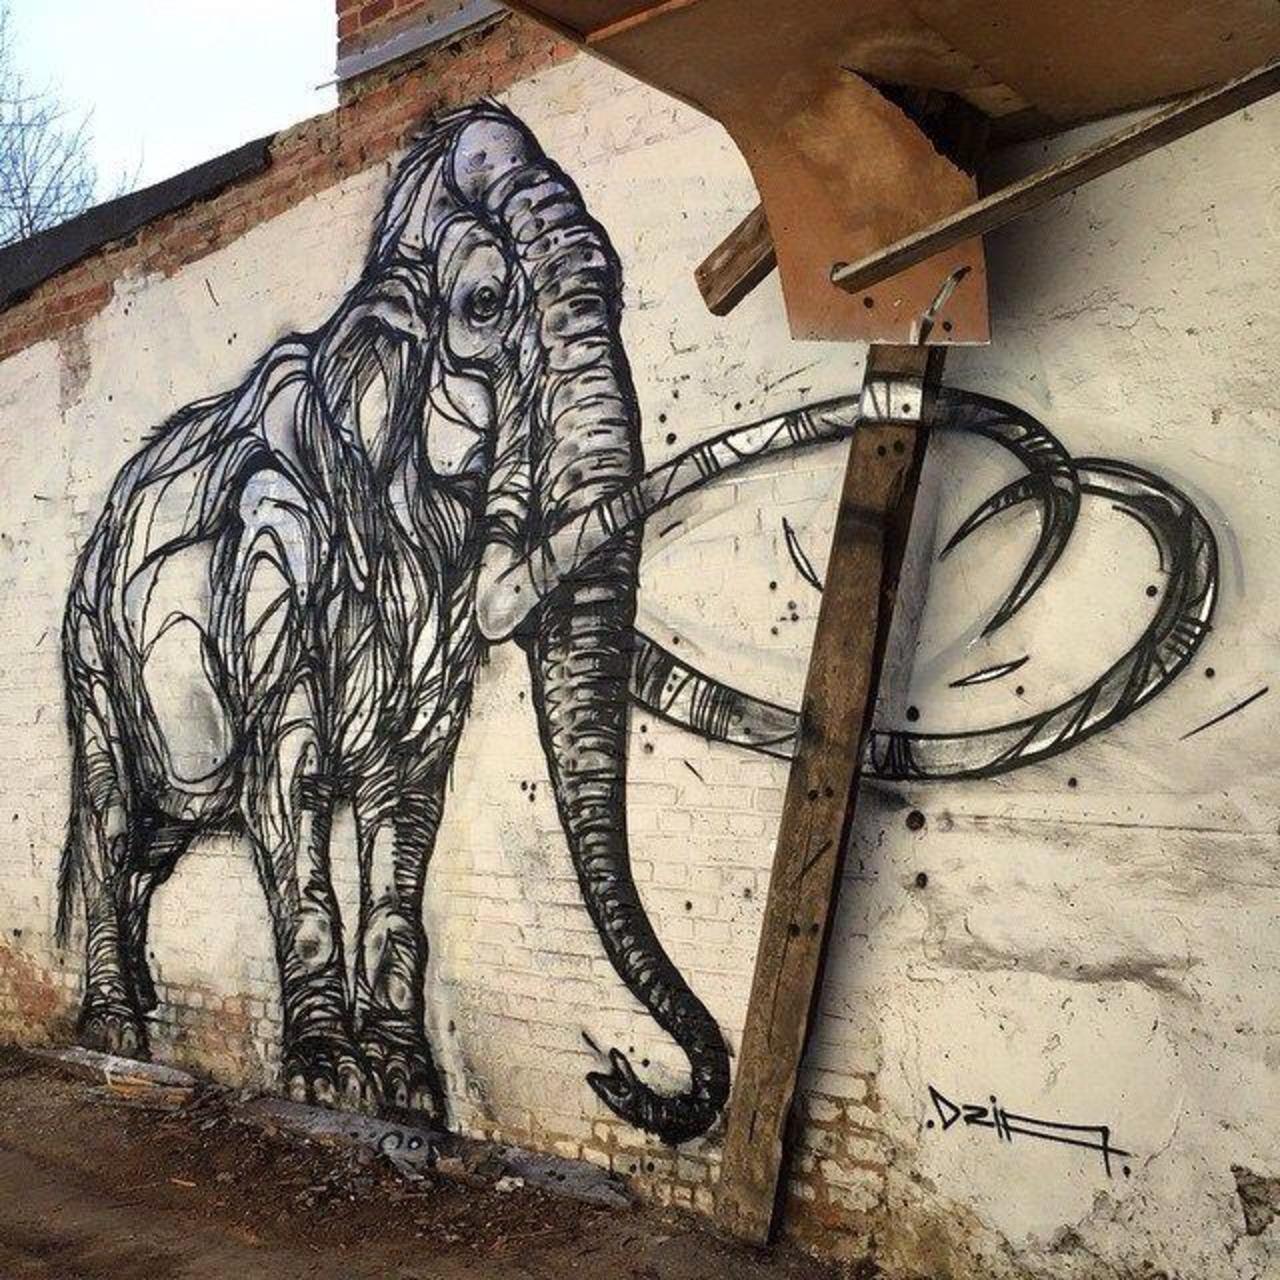 Mammoth. New nature in Street Art wall by DZIA 

#art #graffiti #mural #streetart http://t.co/94LWfaMXXR